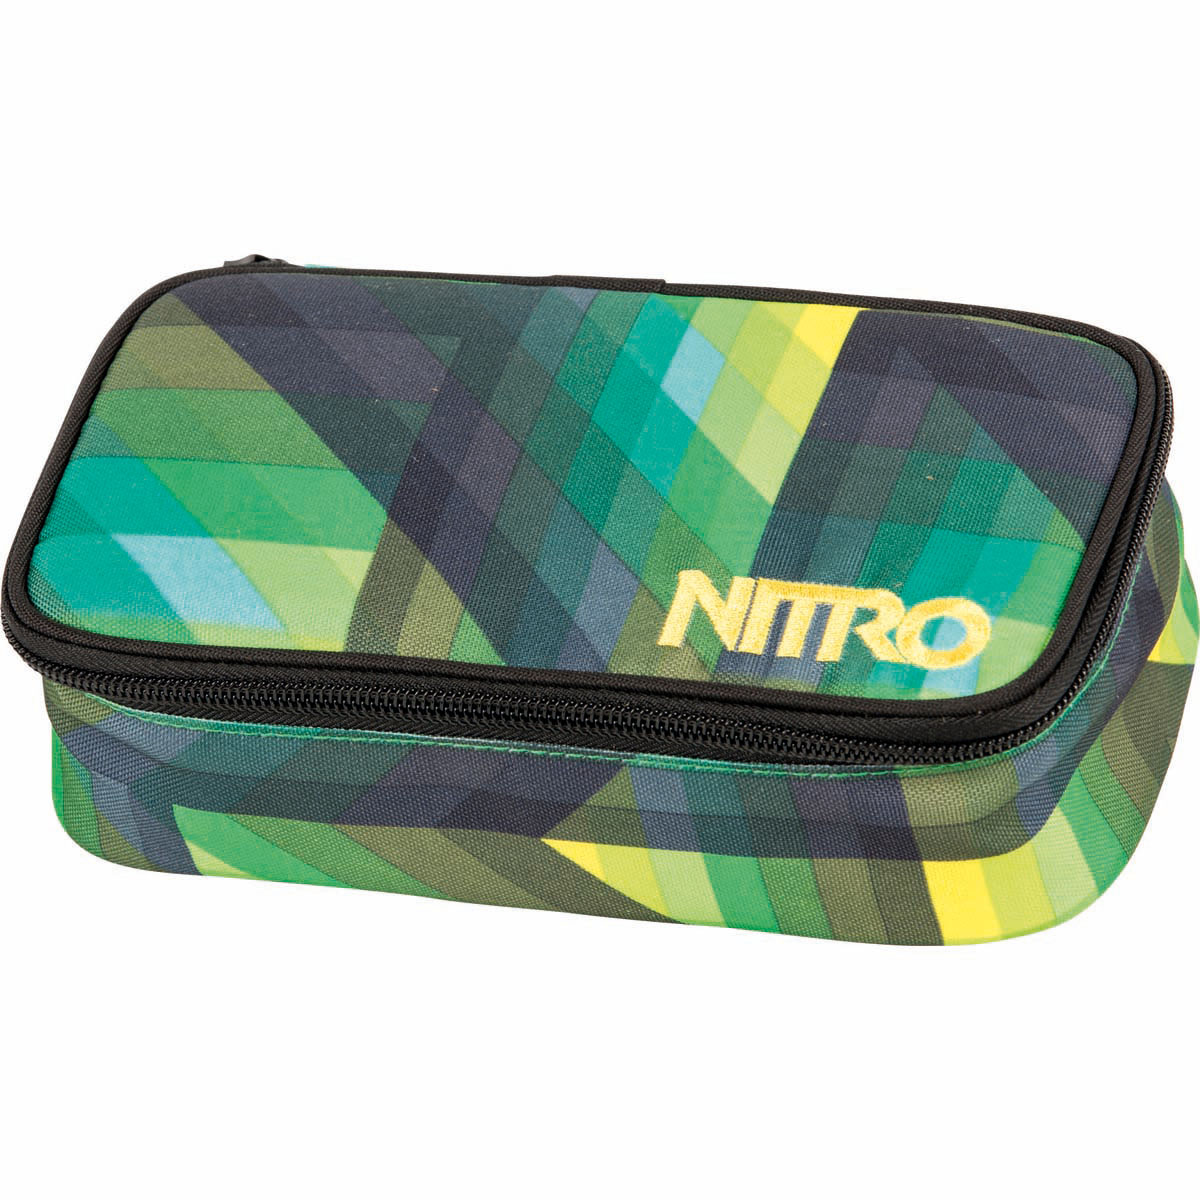 Nitro Pencil Case XL Mäppchen Geo Green | Nitrobags Shop | Federmäppchen